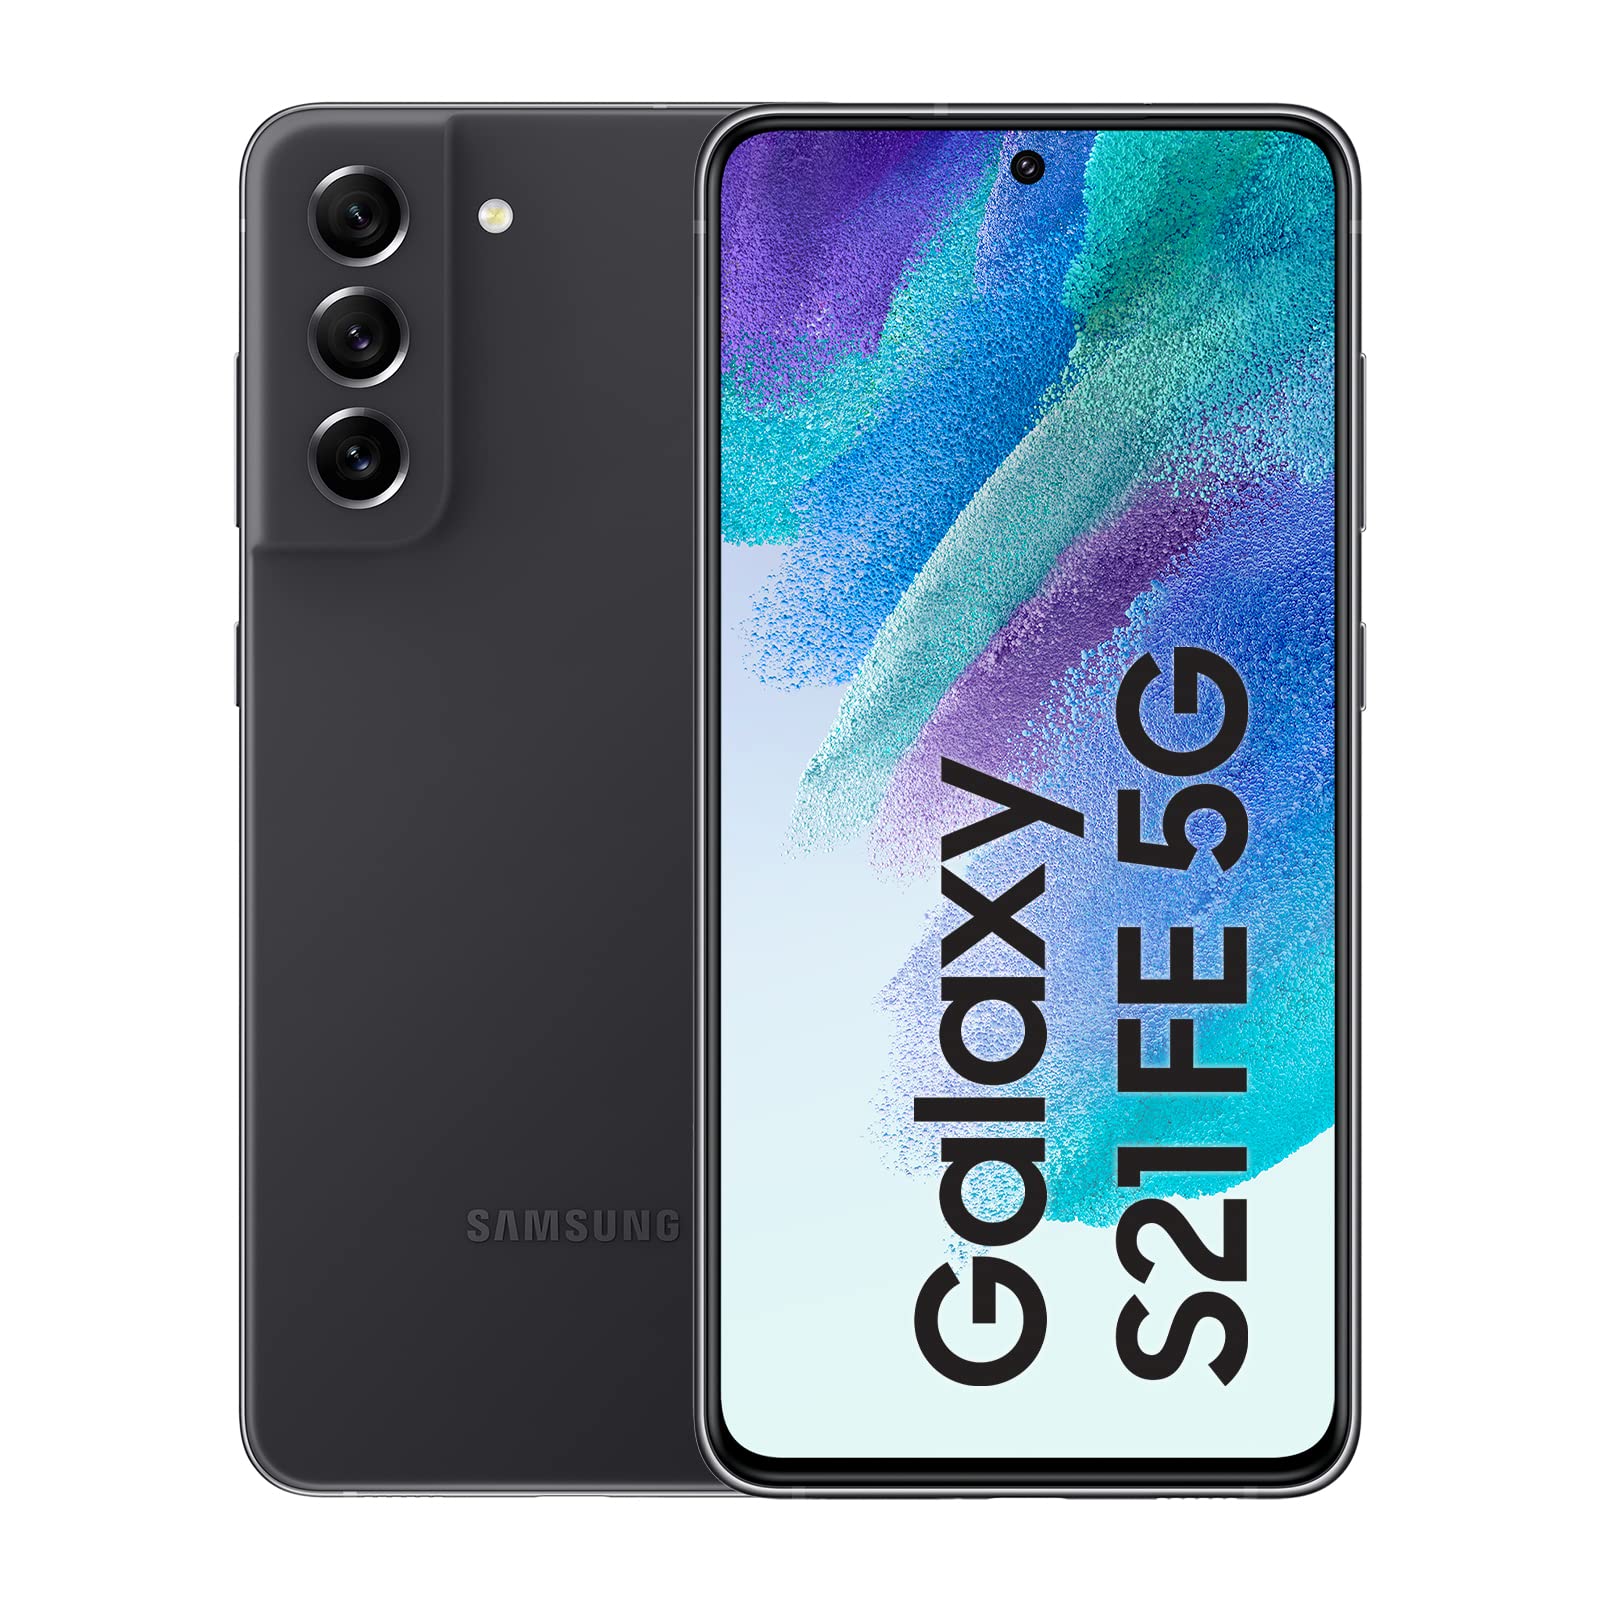 Samsung Galaxy S21 FE 5G - Very Good Condition